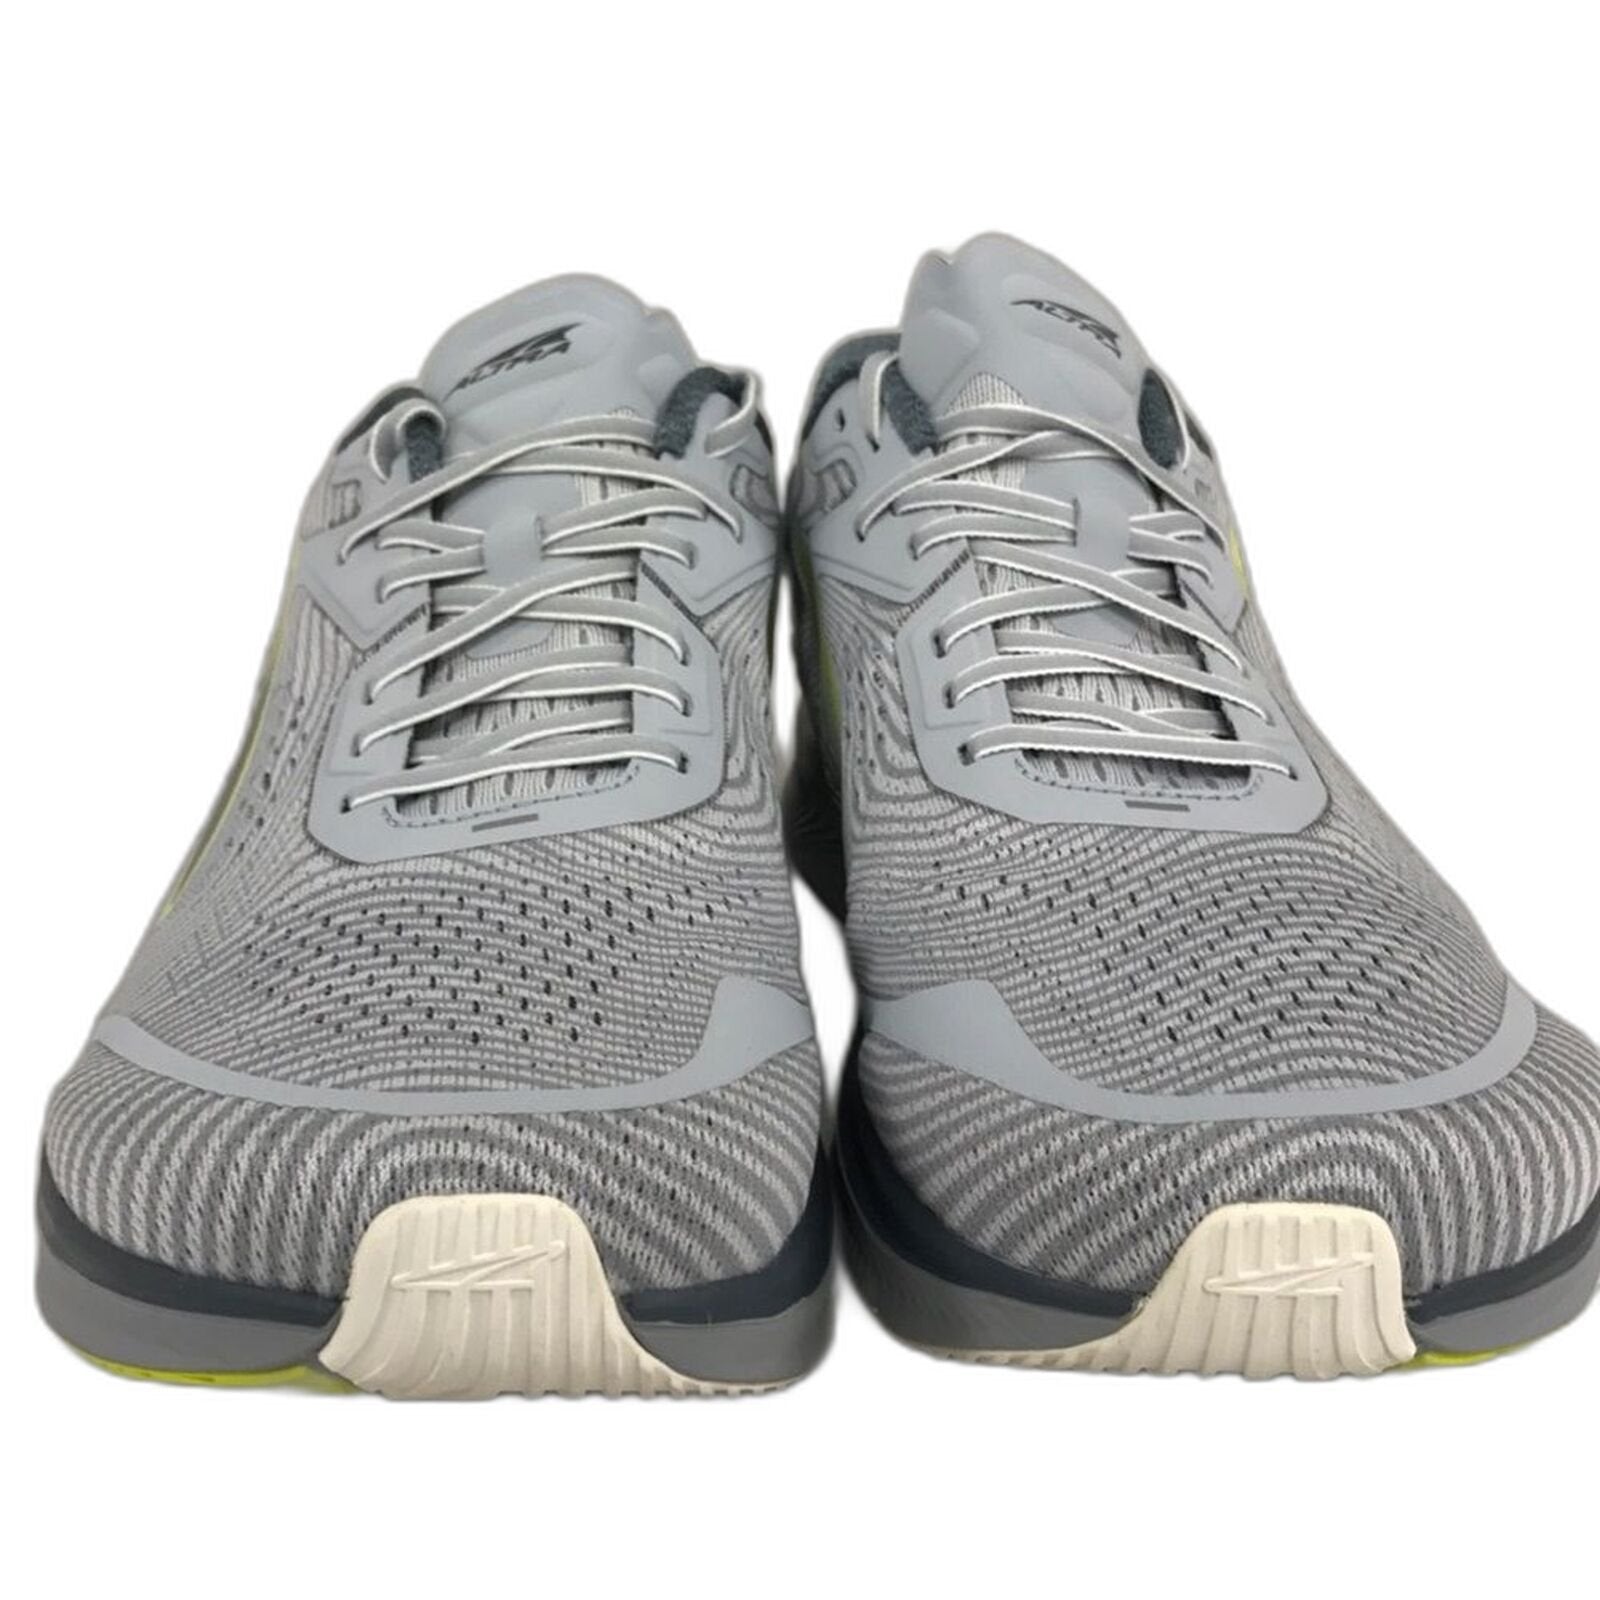 Altra Footwear Torin 5 Gray Lime 12 D (M) US